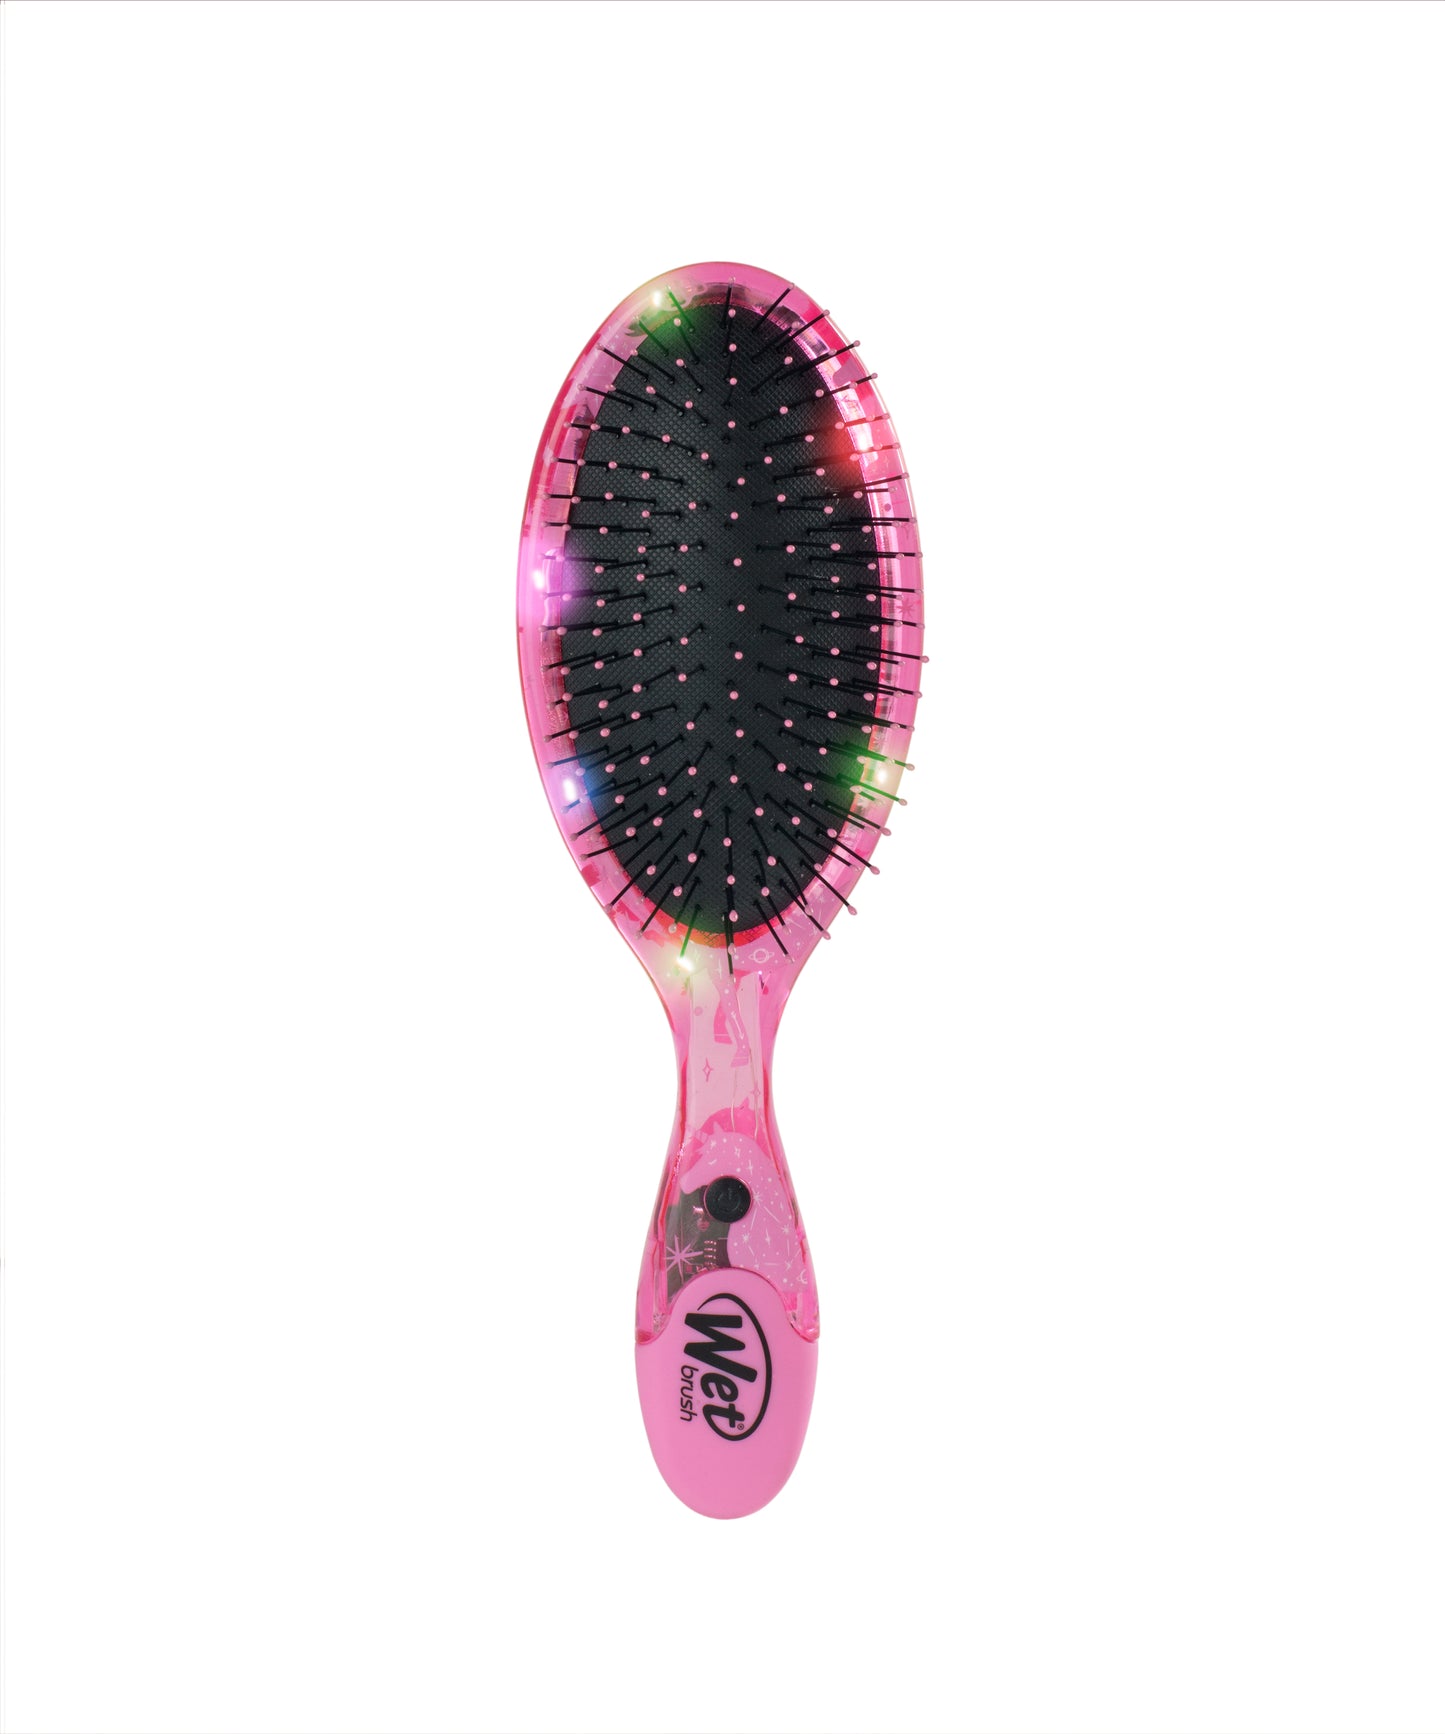 Wet Brush Hair Galaxy Lights Light Up Original Detangler - Pink Unicorn